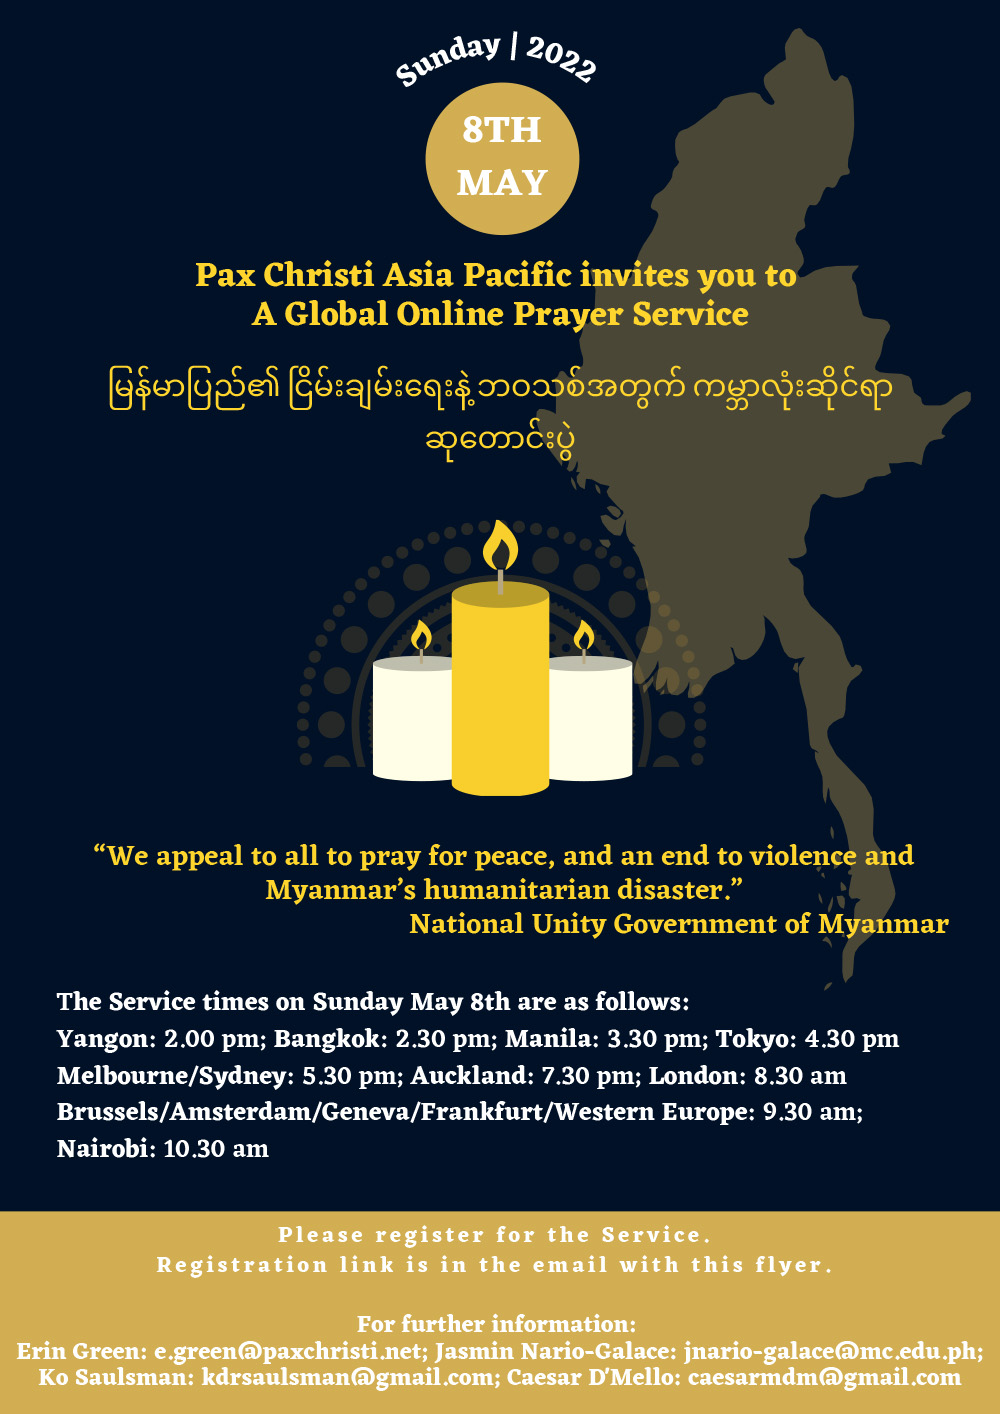 1. Global Prayer Service for Myanmar